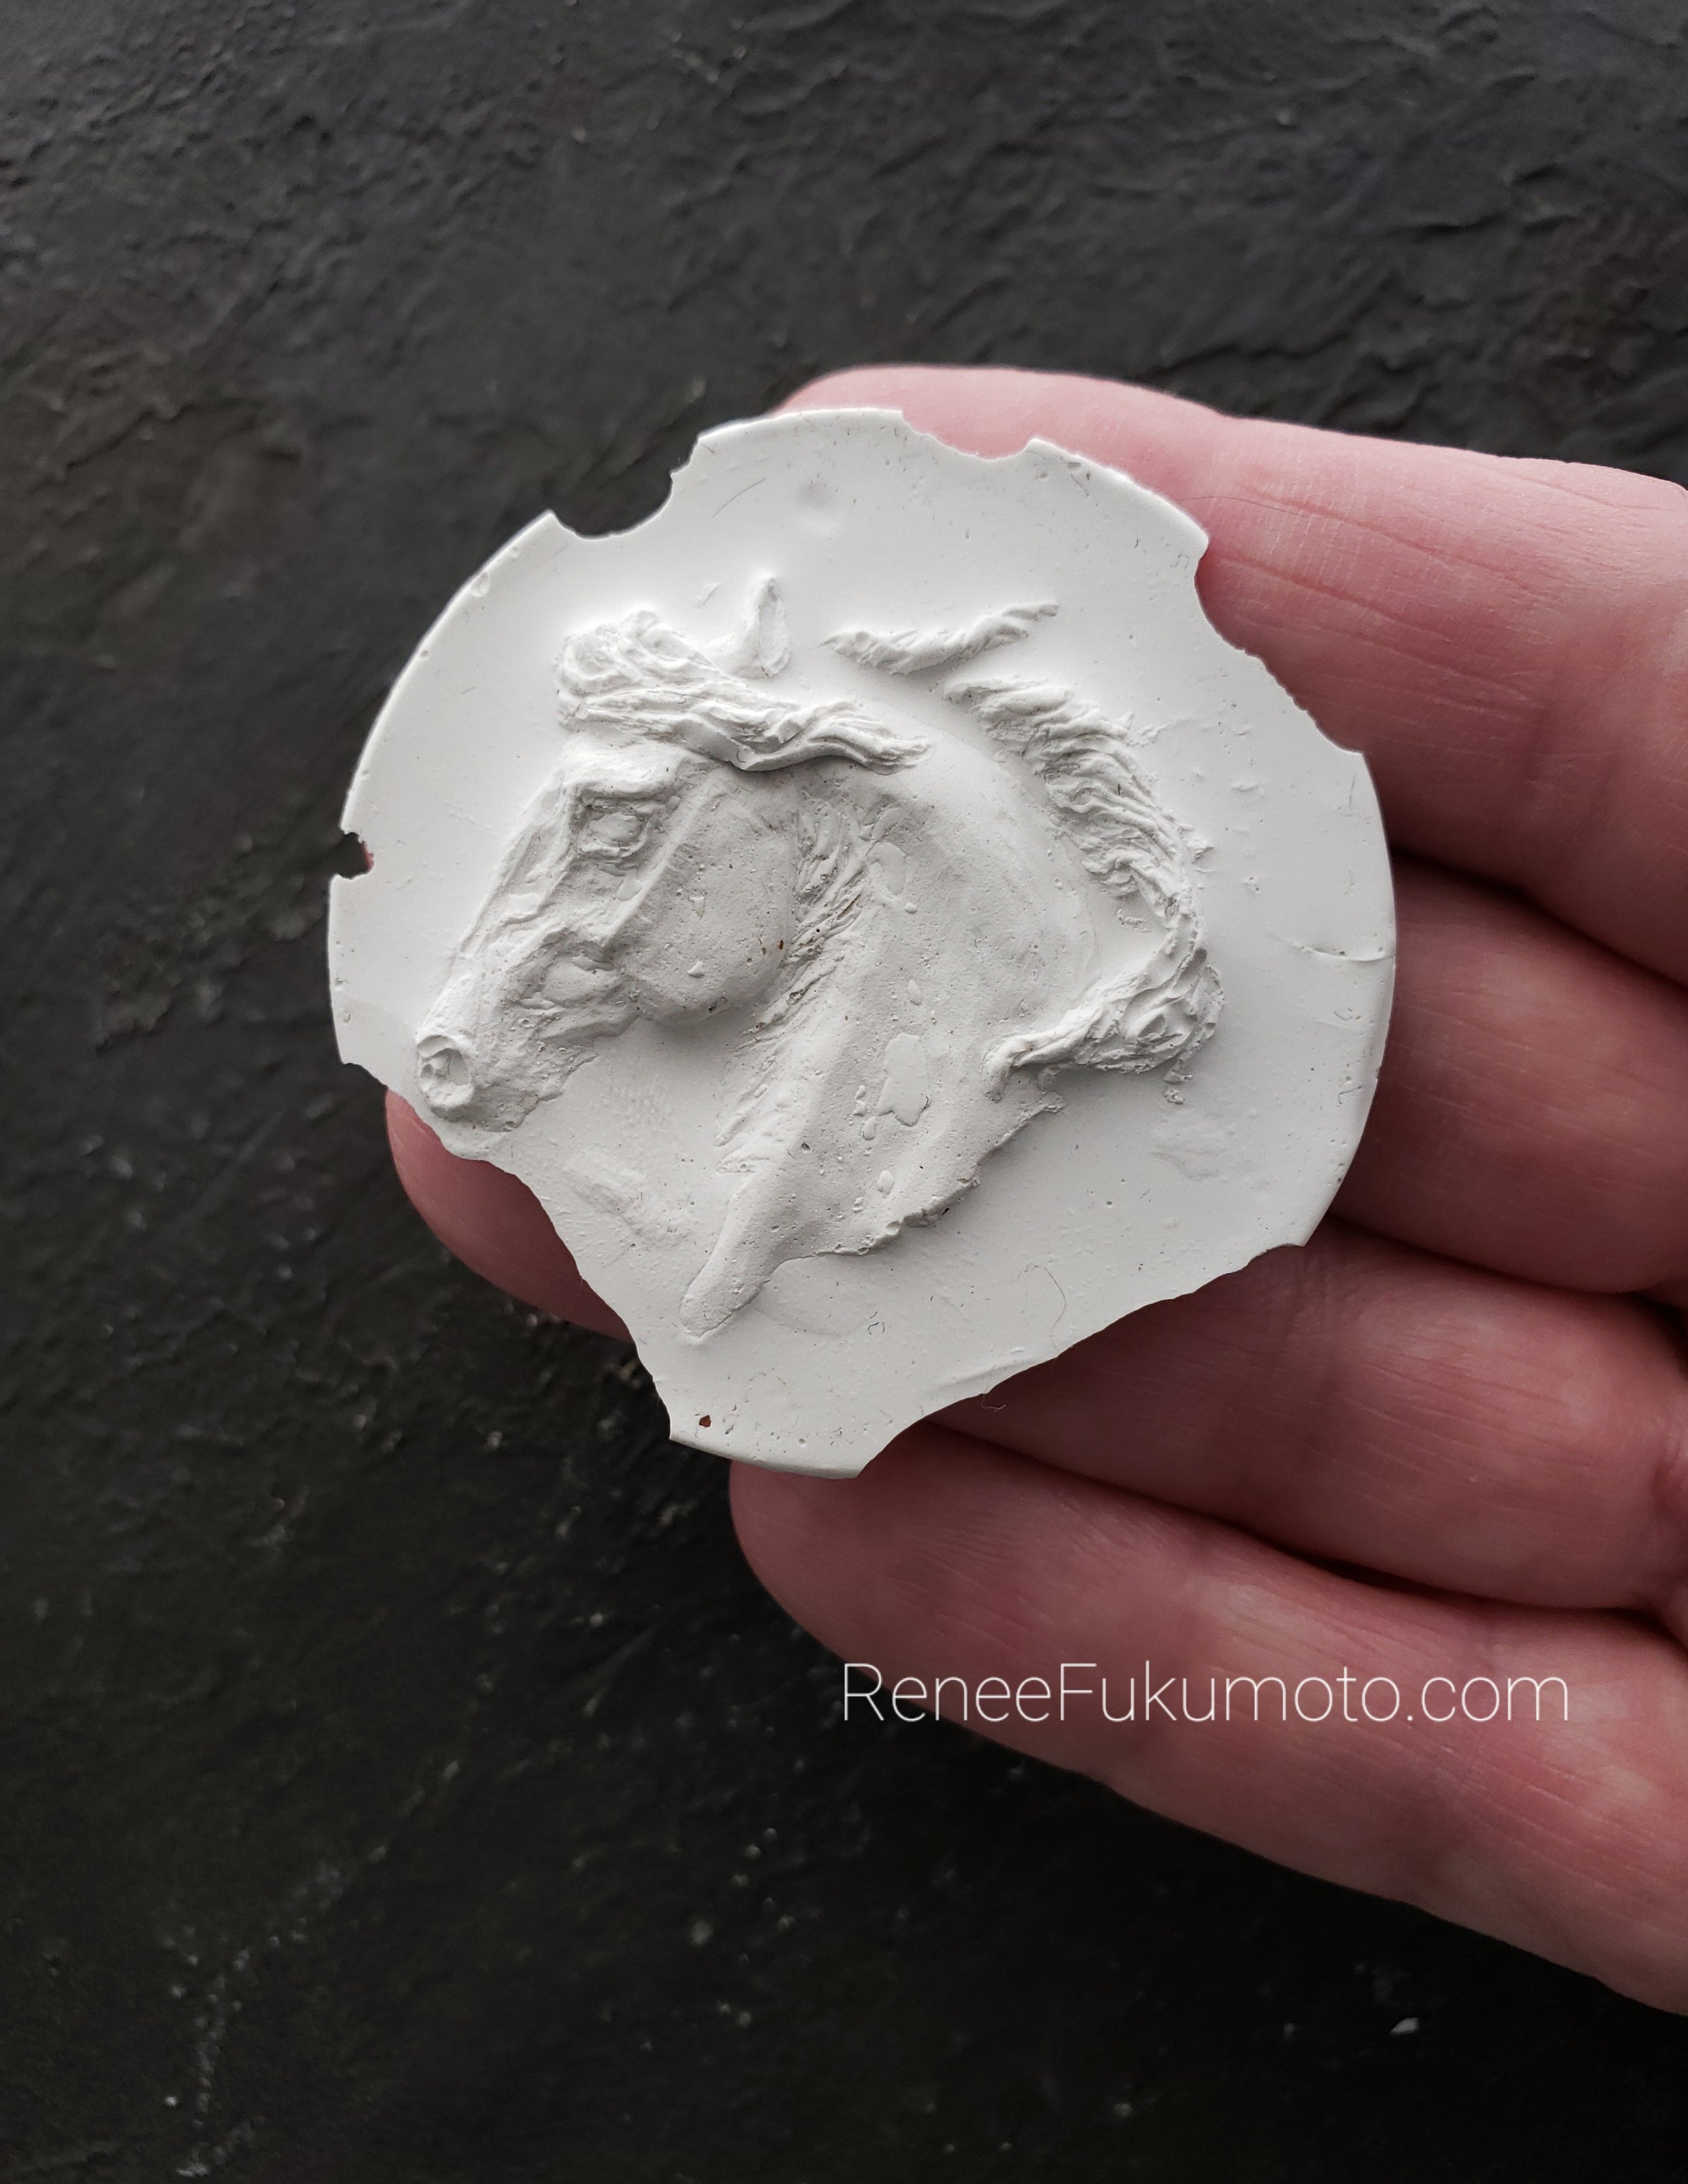 White horse head sculpture intaglio renee fukumoto.jpg